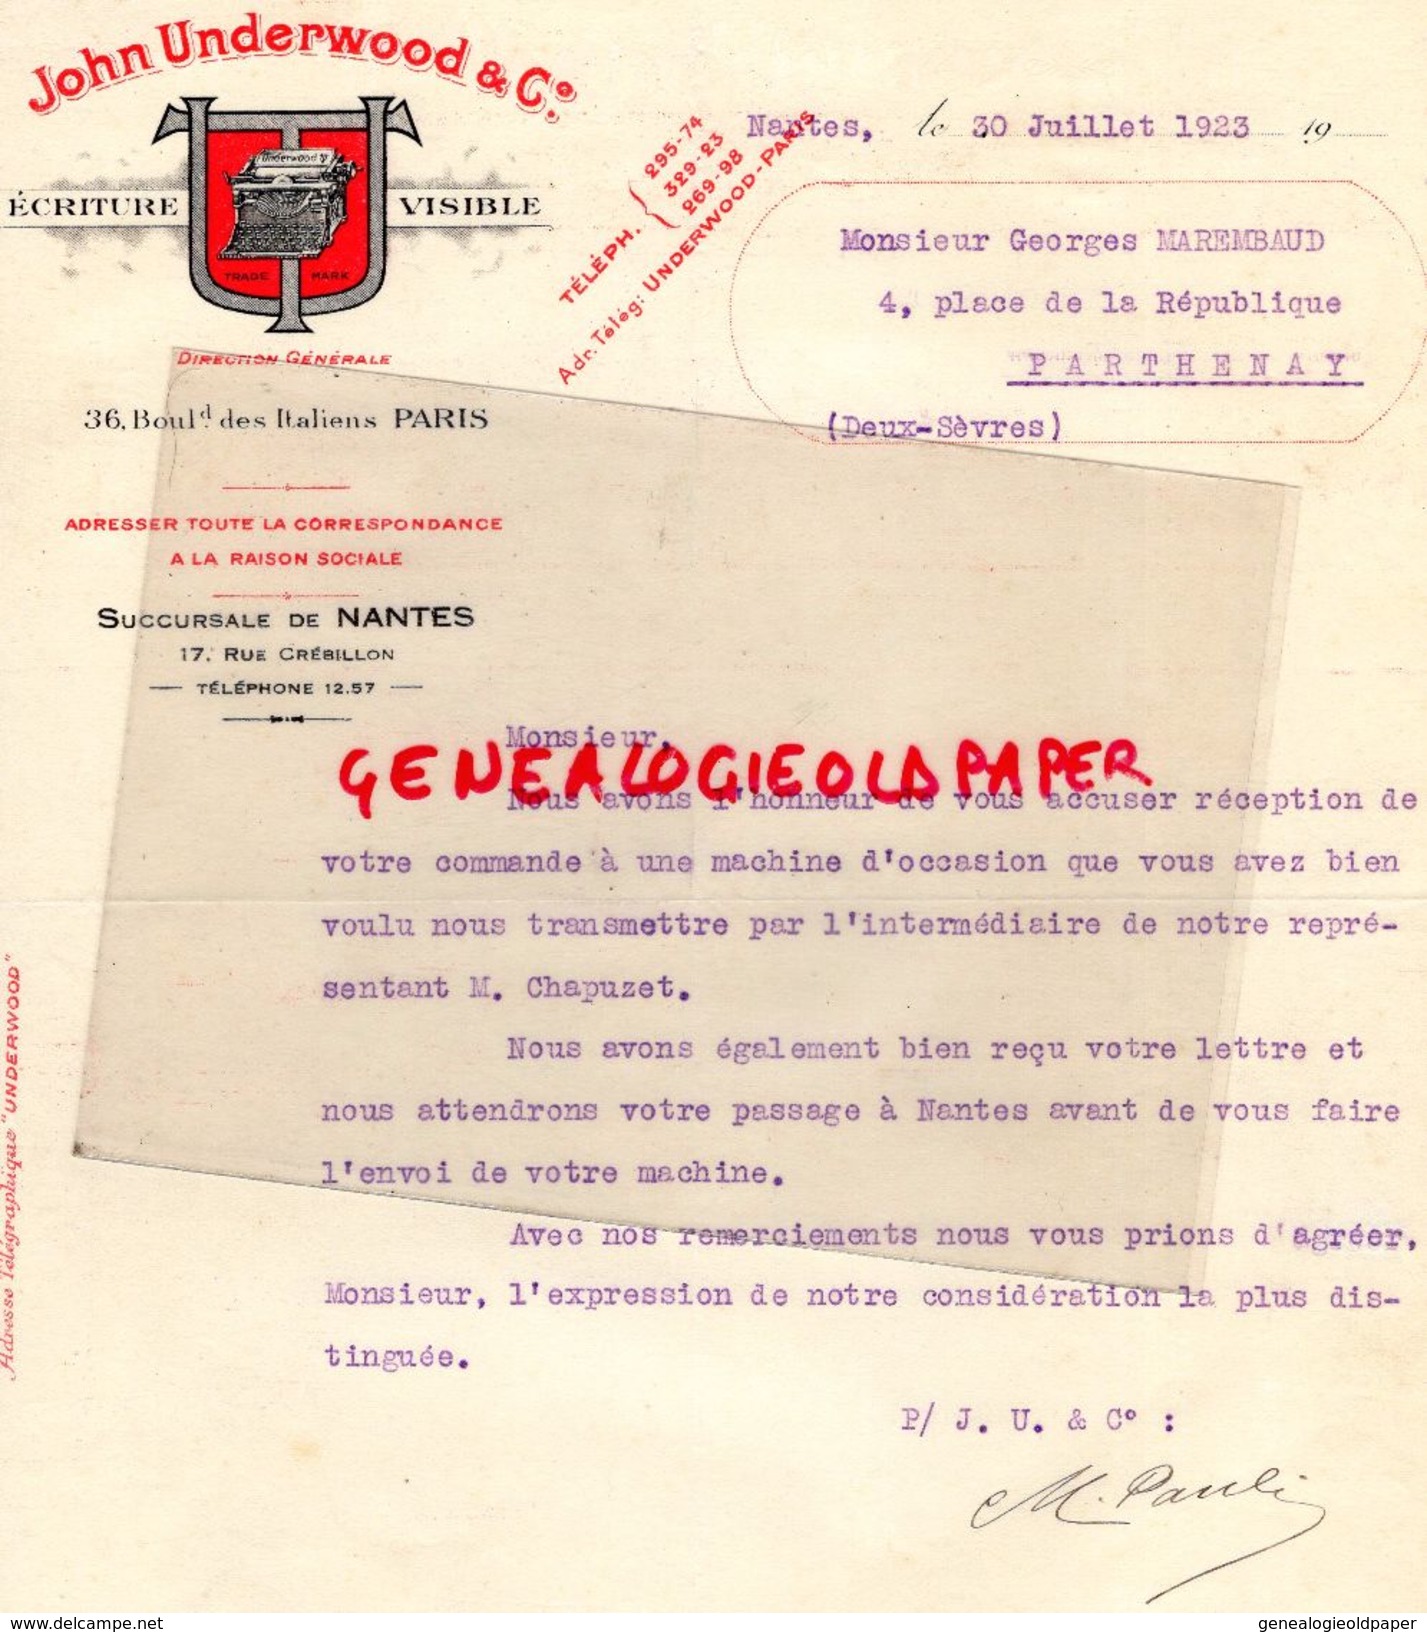 44- NANTES- FACTURE JOHN UNDERWOOD-ECRITURE VISIBLE-MACHINE A ECRIRE-36 BD-ITALIENS PARIS- 17 RUE CREBILLON-1923 - Druck & Papierwaren